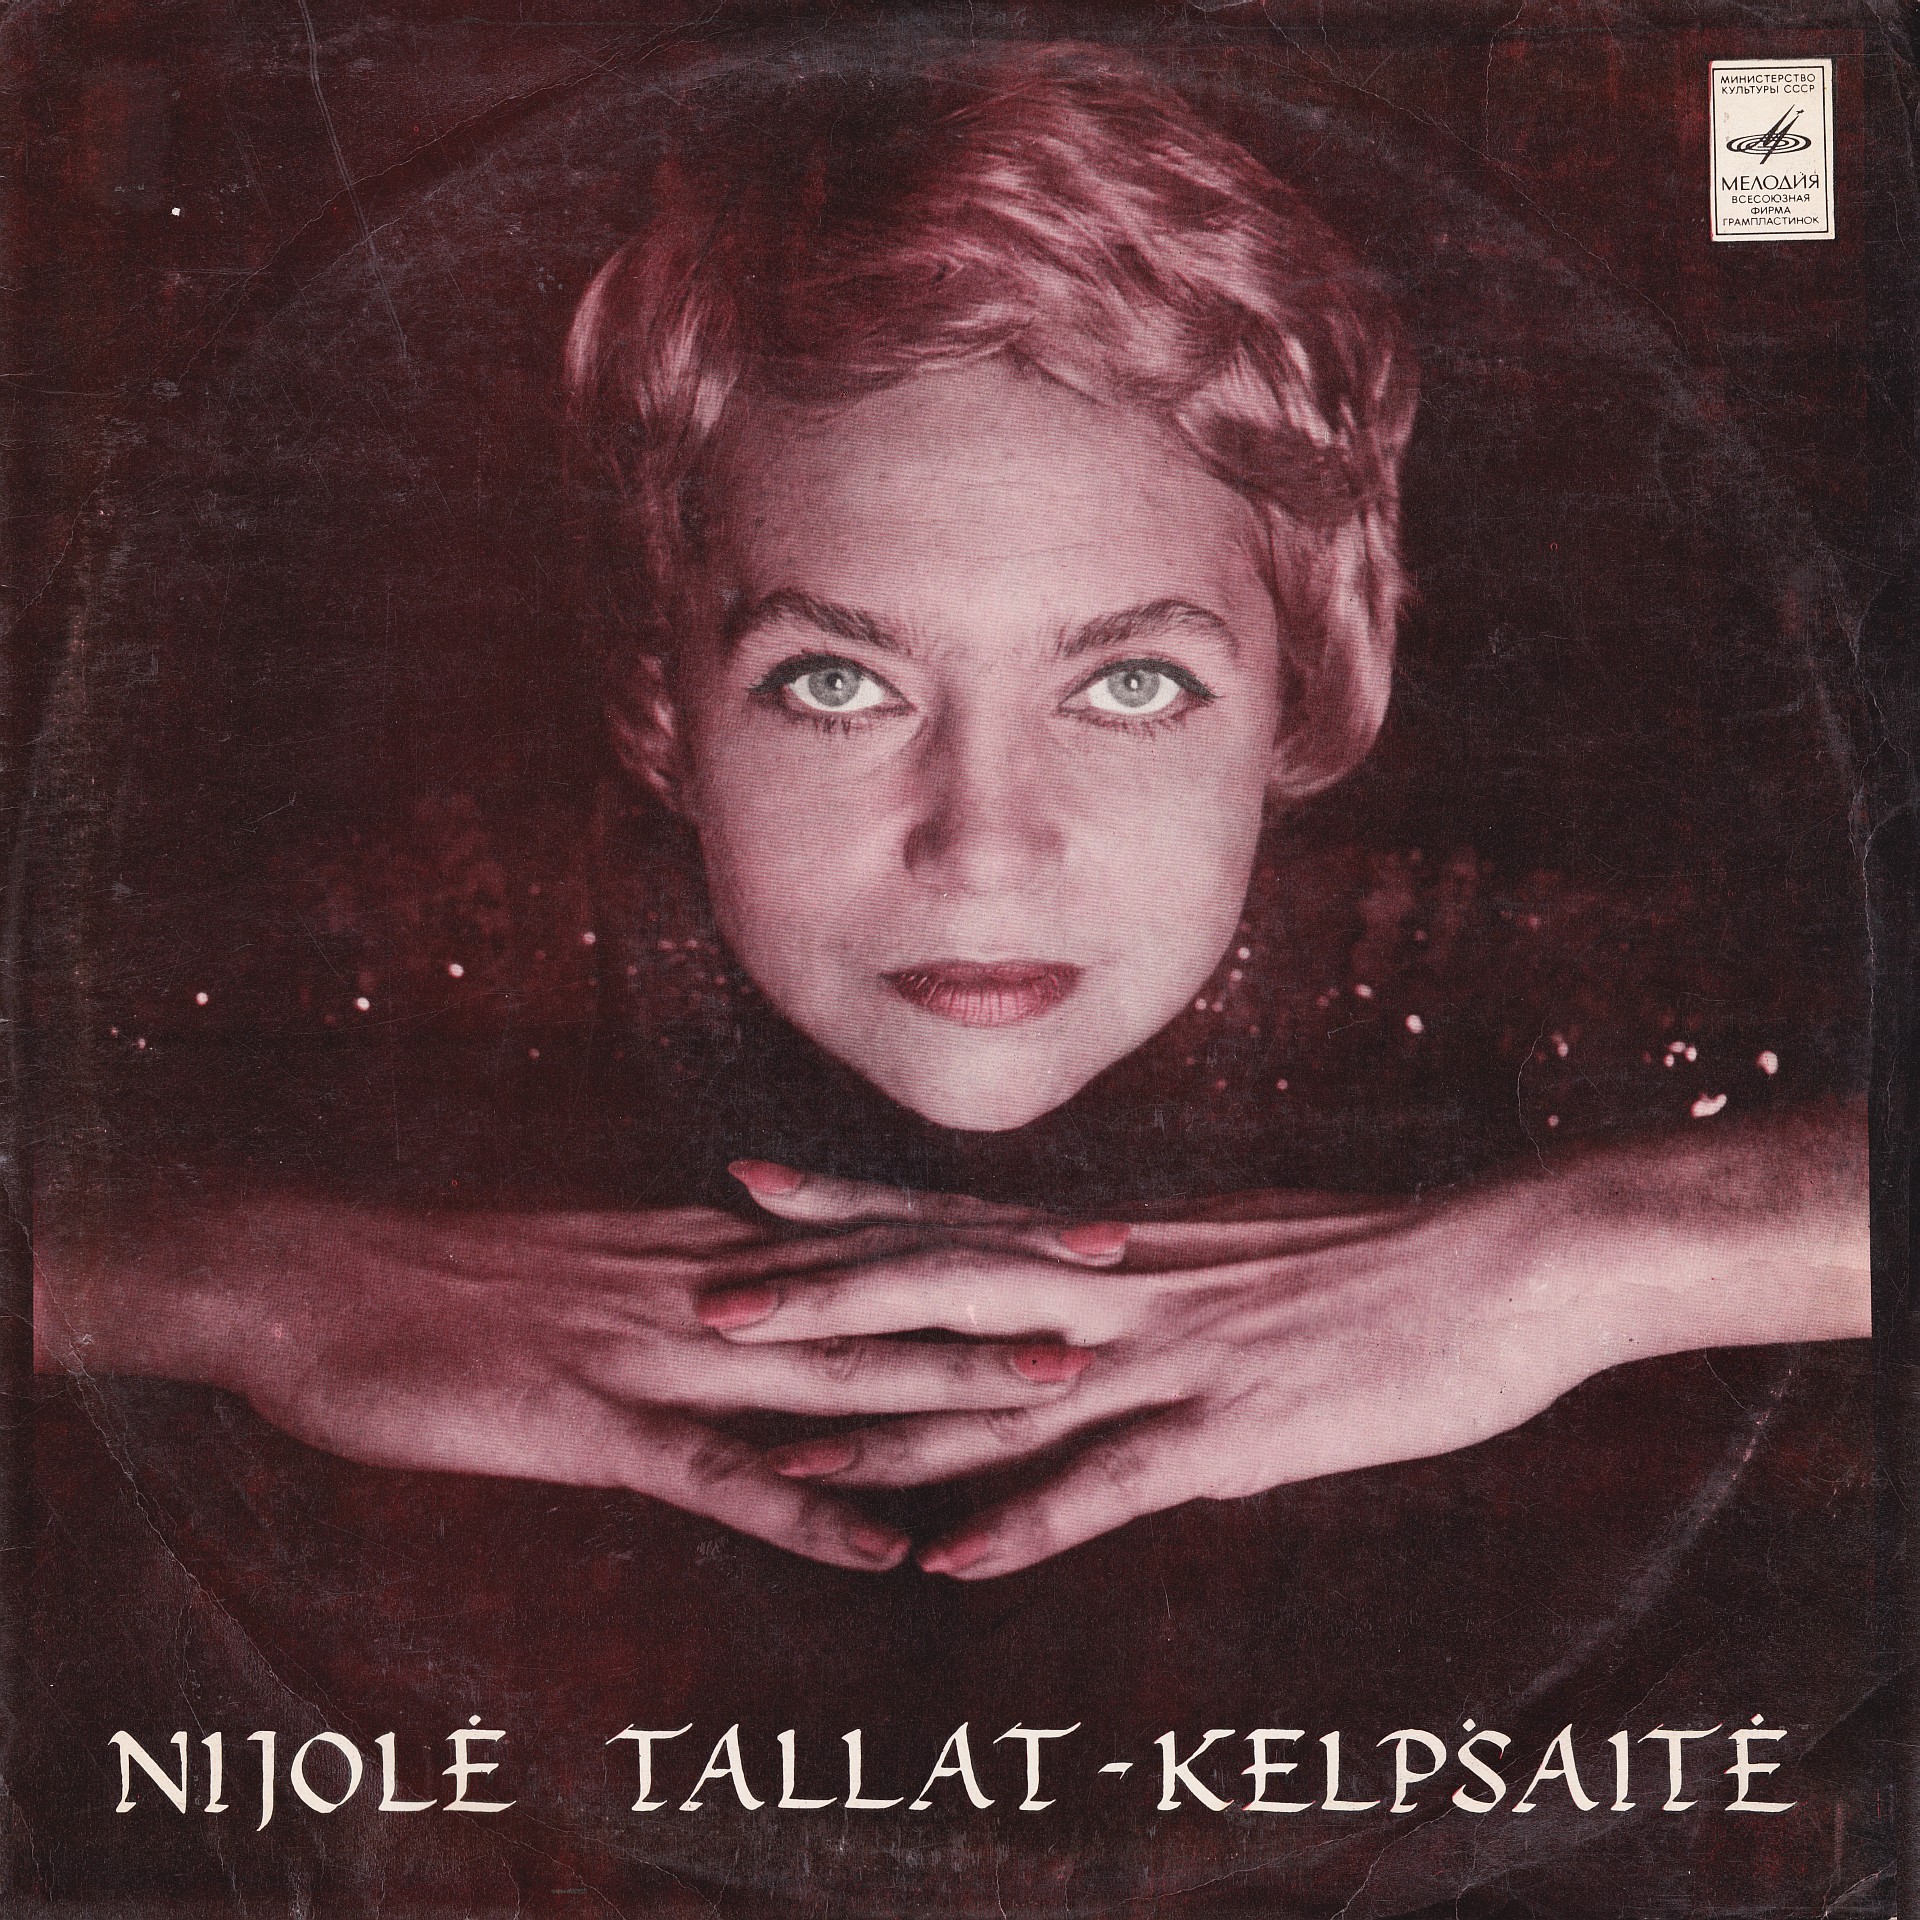 Nijole TALLAT-KELPSAITE / Ниёле ТАЛЛАТ-КЯЛПШАЙТЕ (на литовском языке)